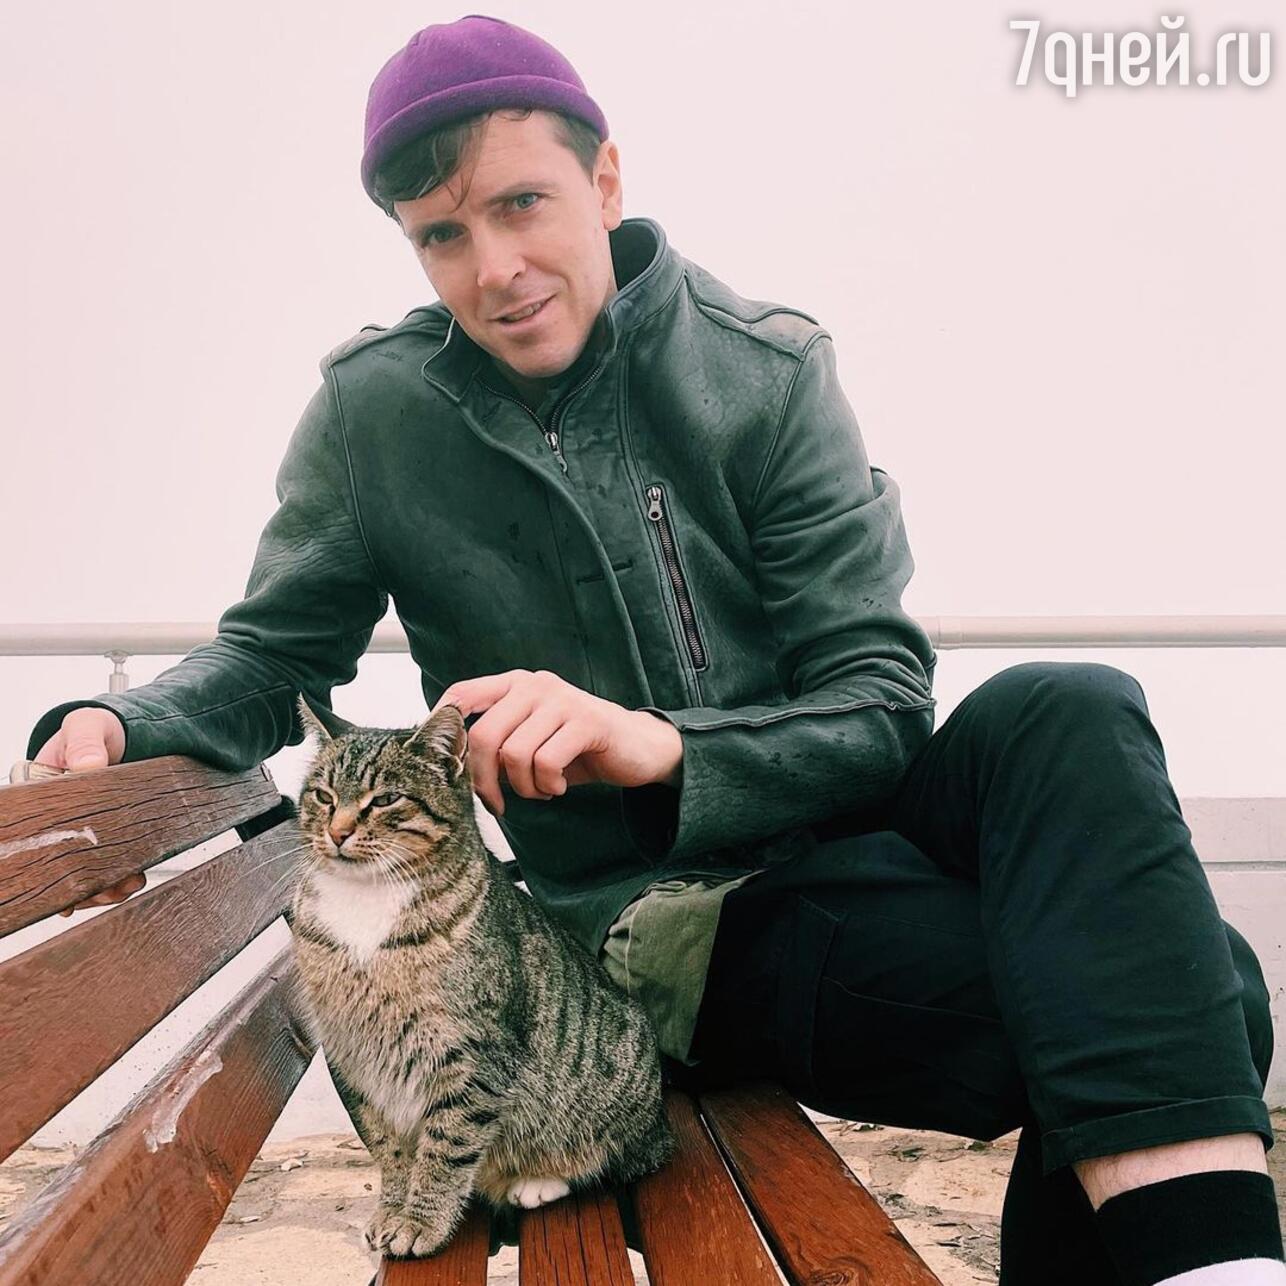 Арсений Попов с кошкой